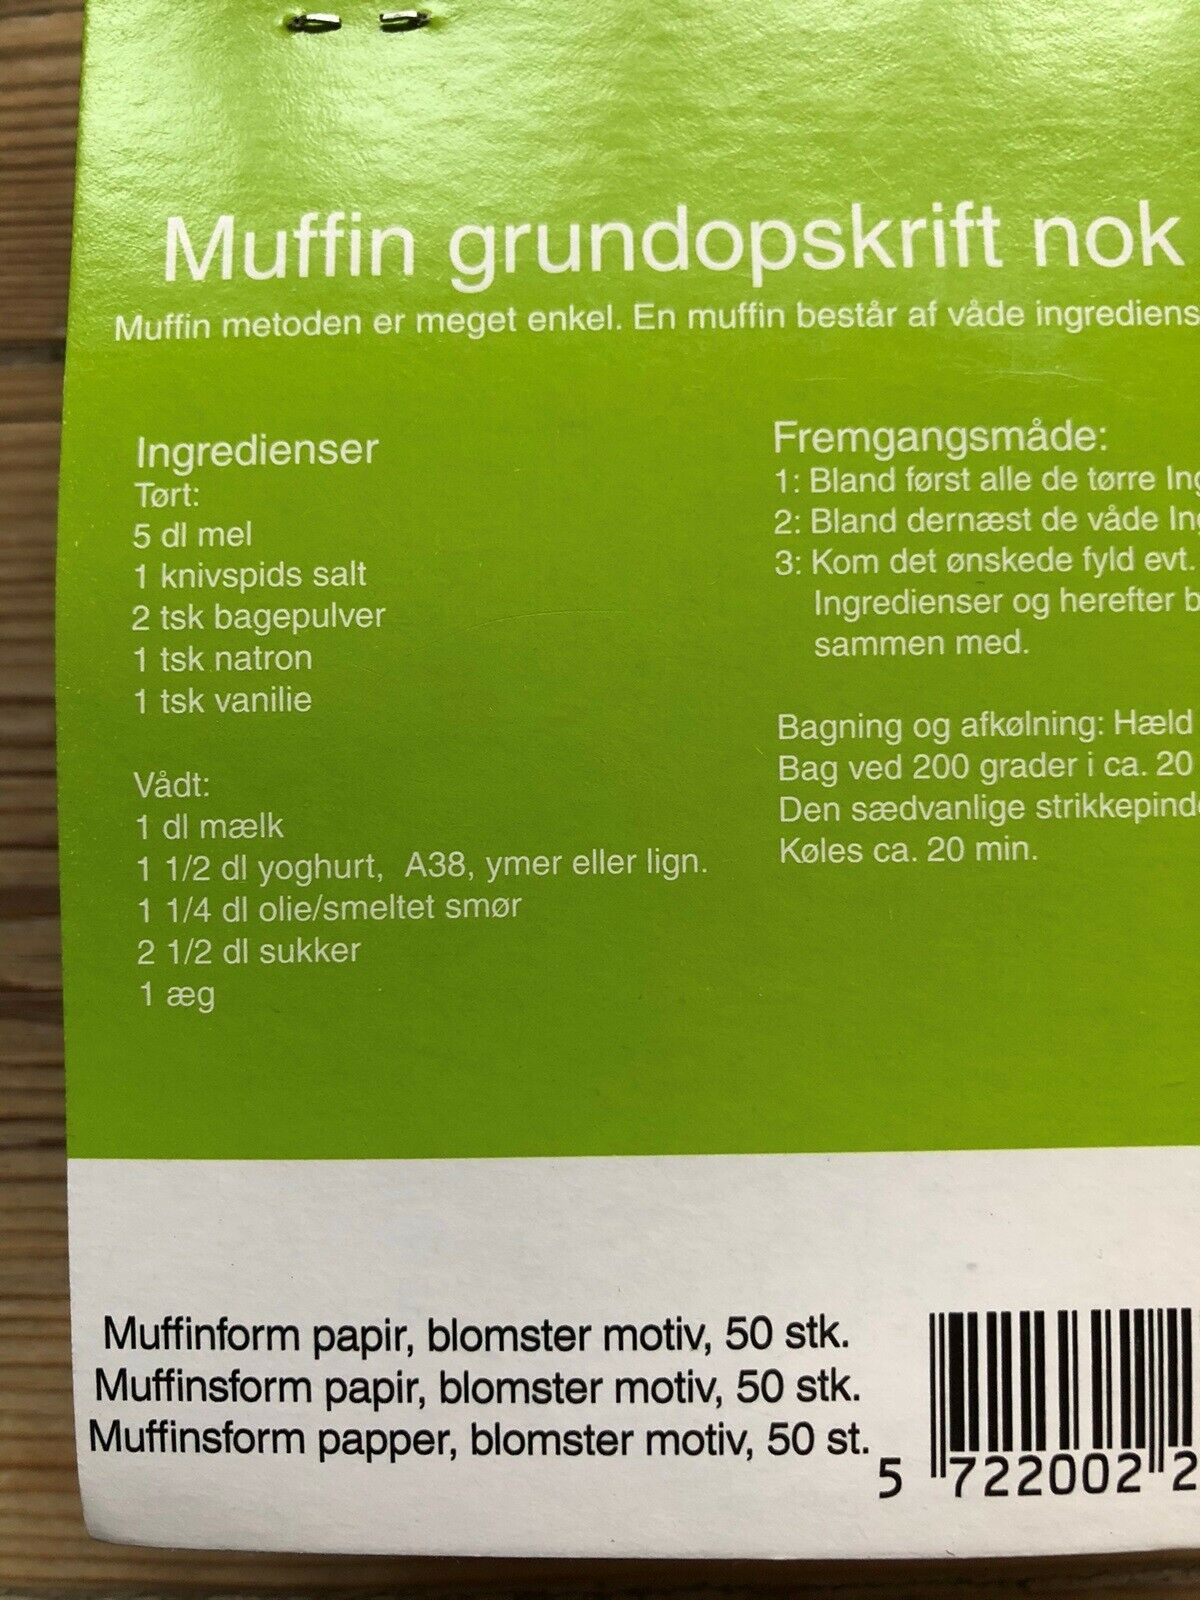 Muffin papirforme